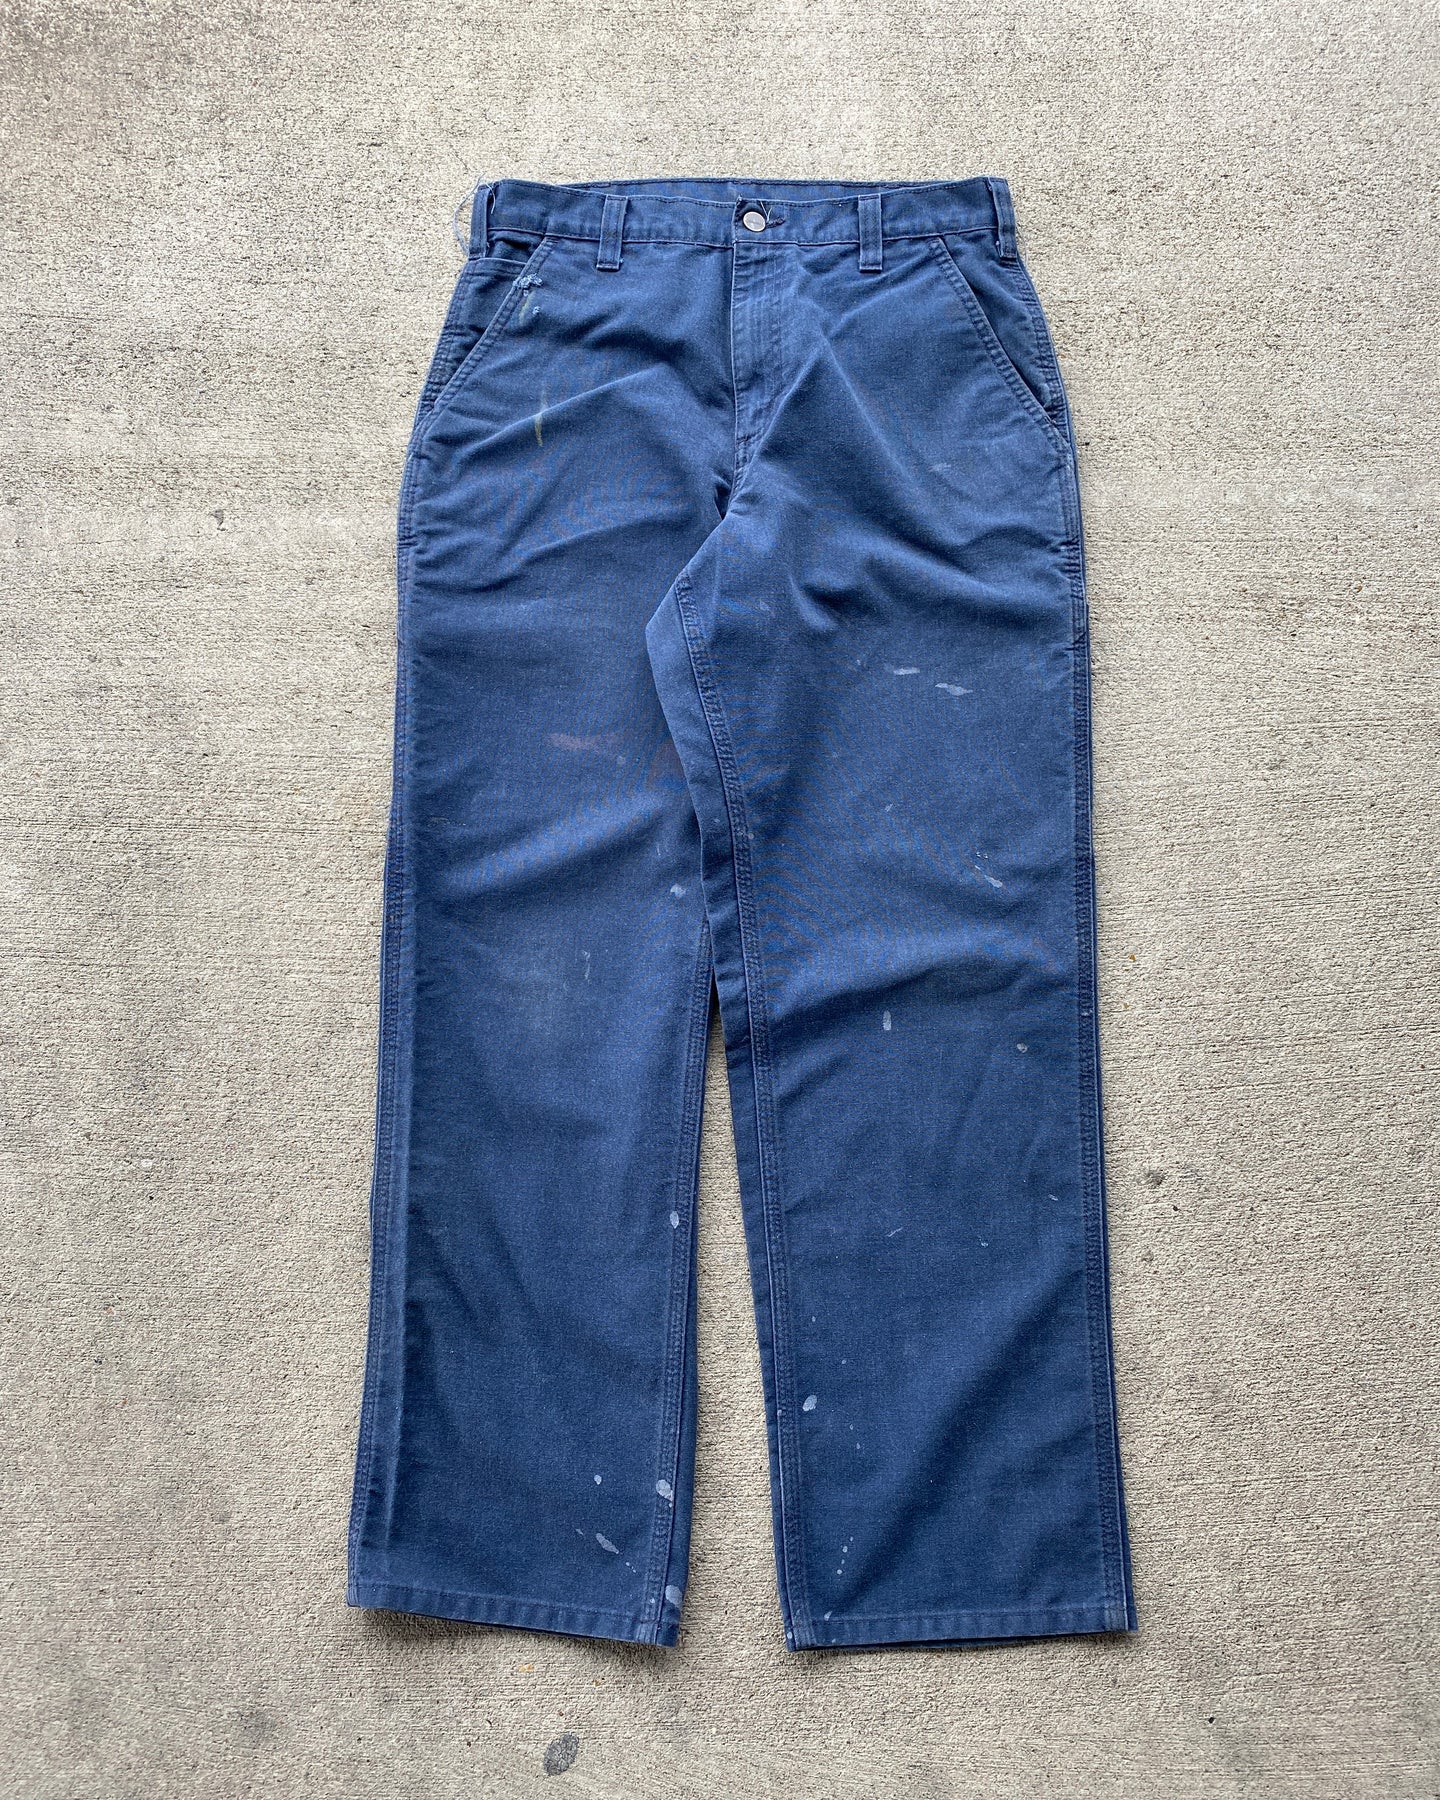 1990s Navy Carhartt Painter's Carpenter Pants - Size 30 x 31